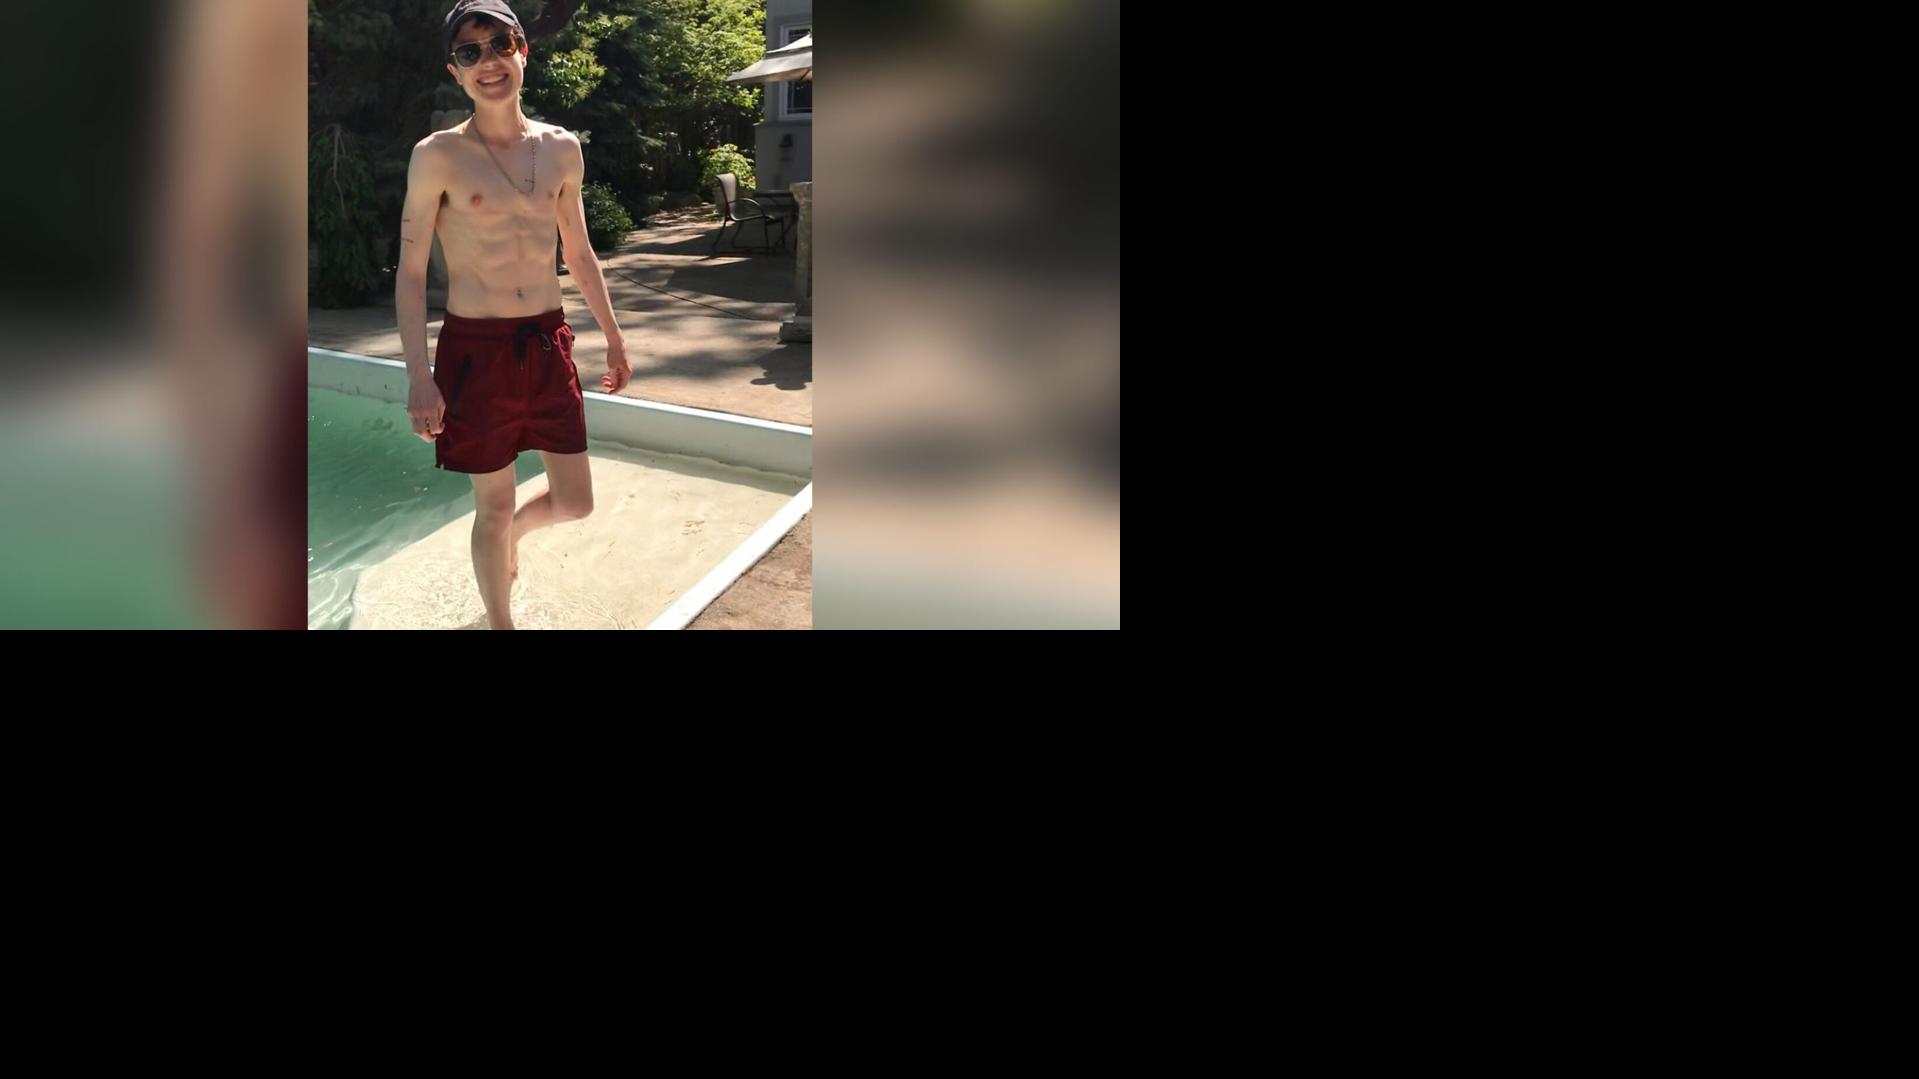 Elliot Page shares joyful 'first swim trunks' photo after 'life